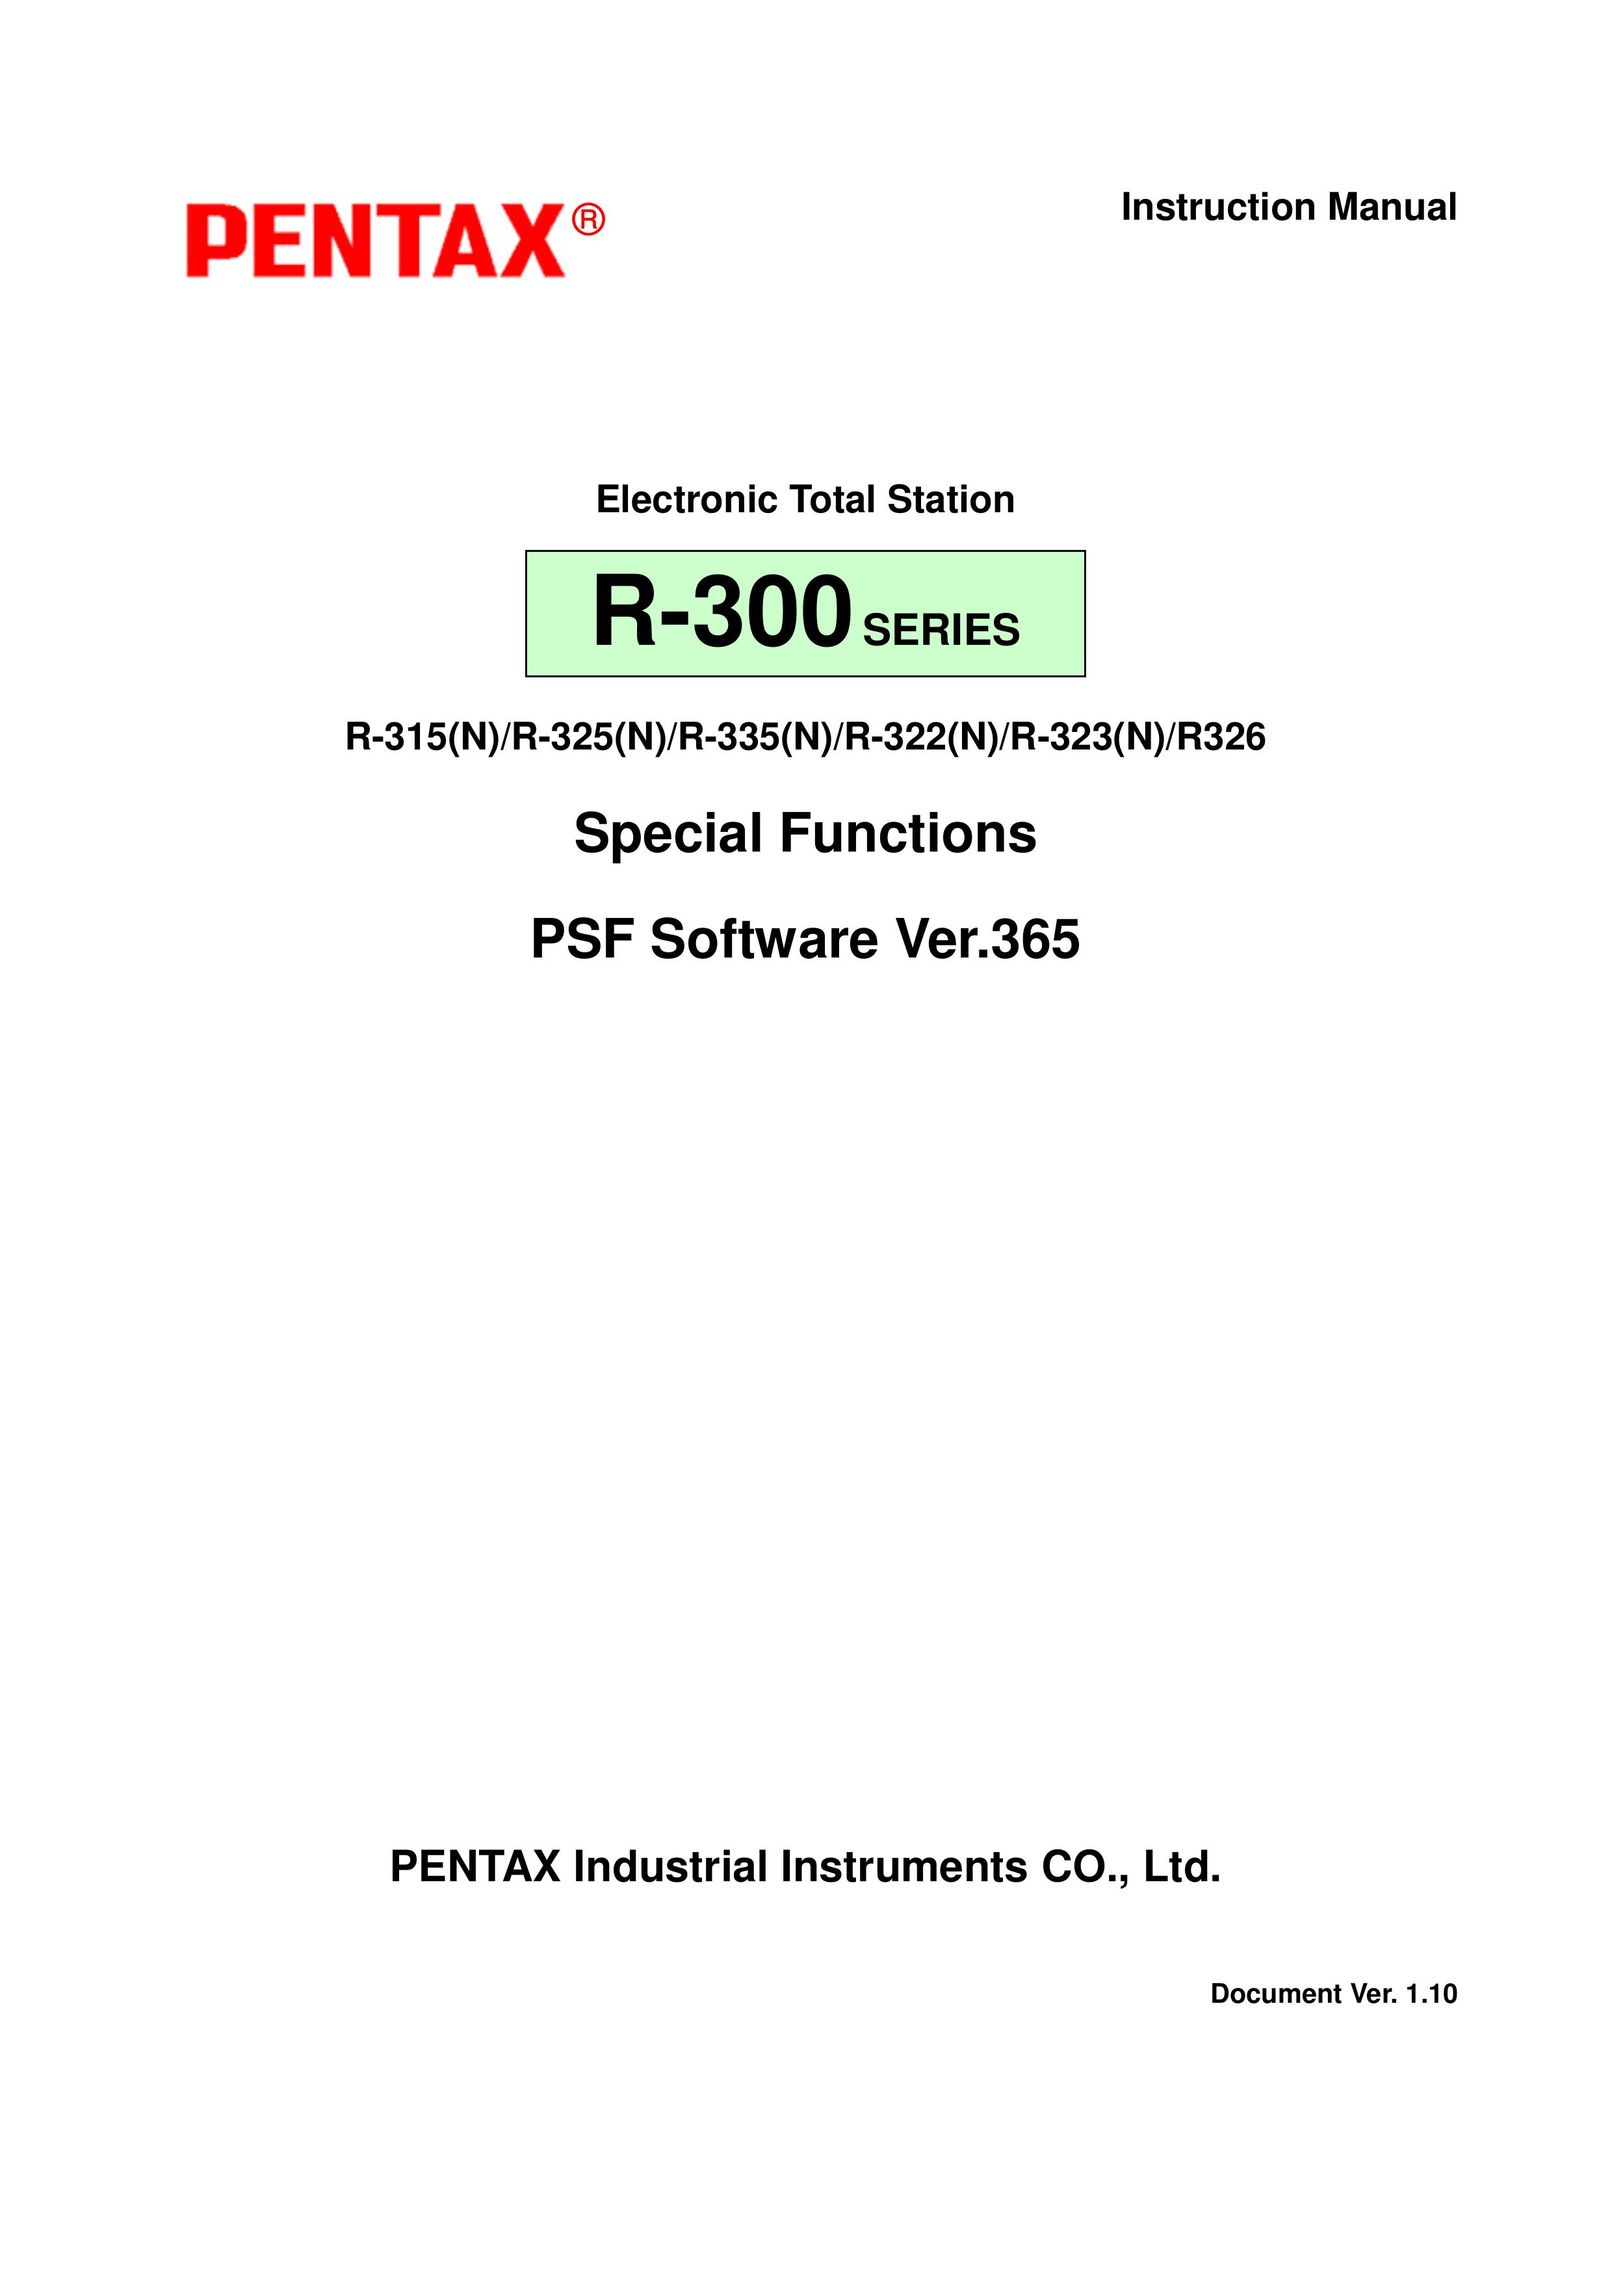 Pentax R-322(N) Home Gym User Manual